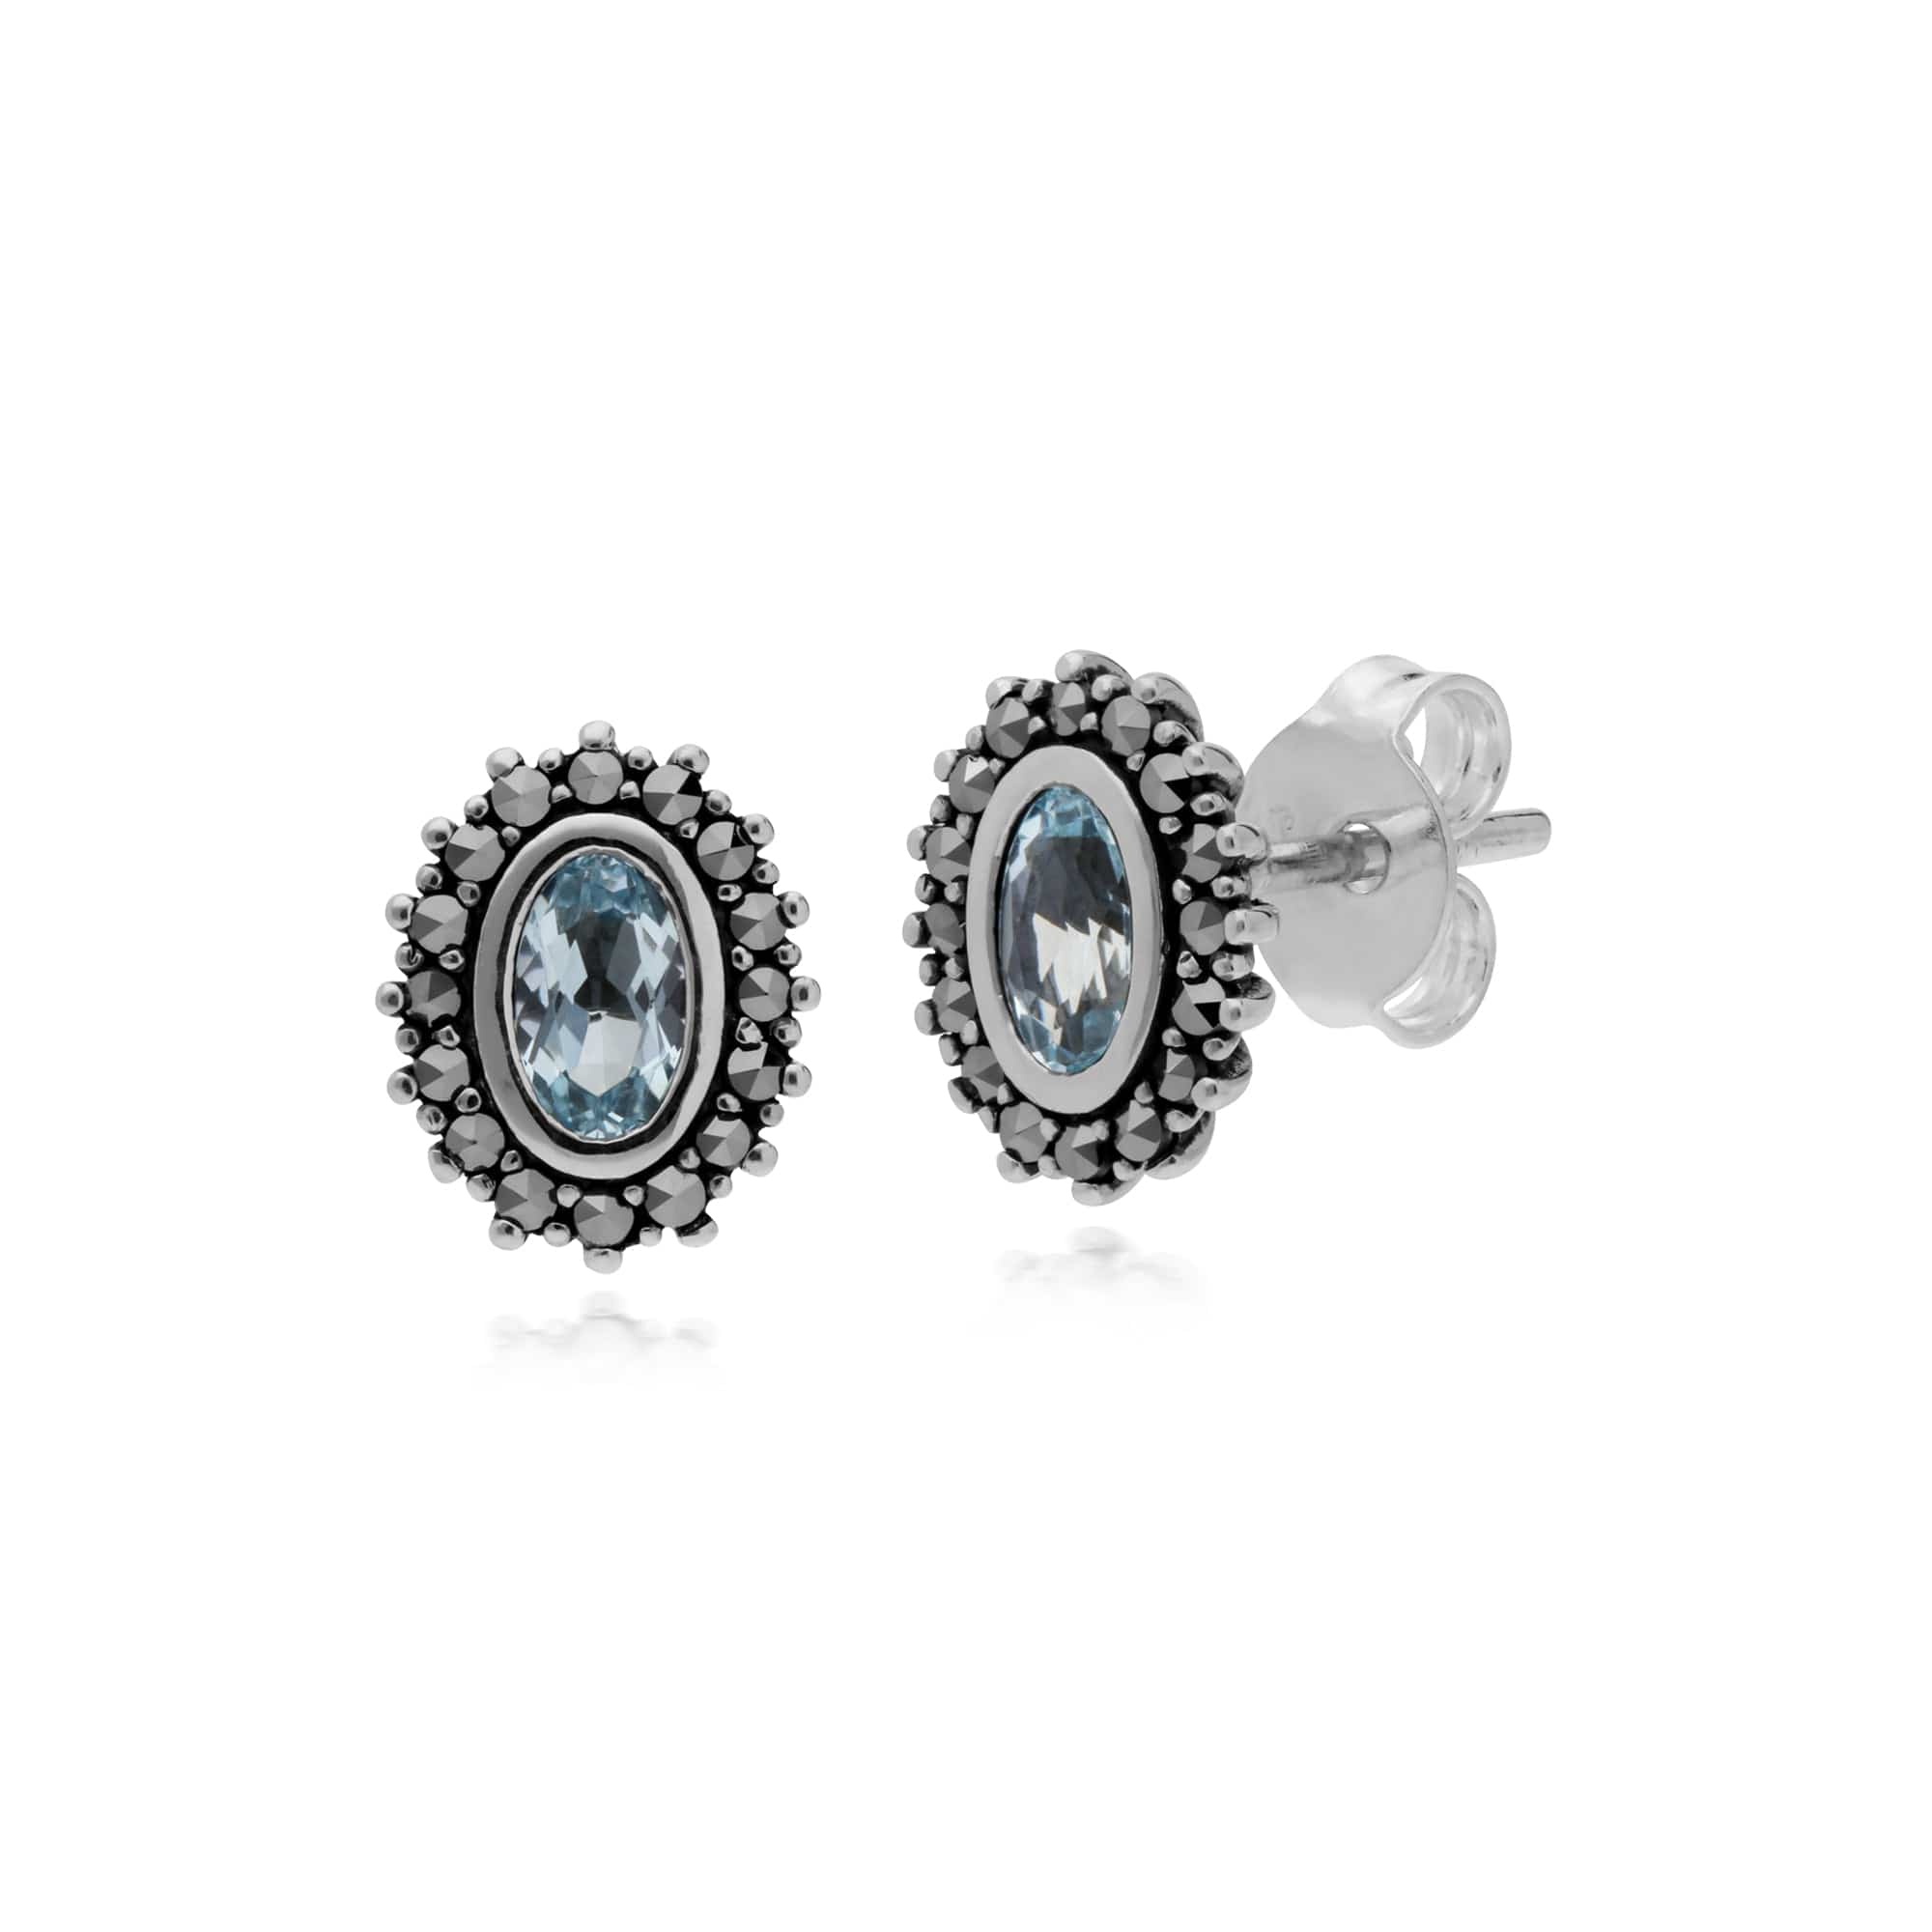 214E860901925-214R599701925 Art Deco Style Oval Blue Topaz & Marcasite Halo Stud Earrings & Ring Set in 925 Sterling Silver 2